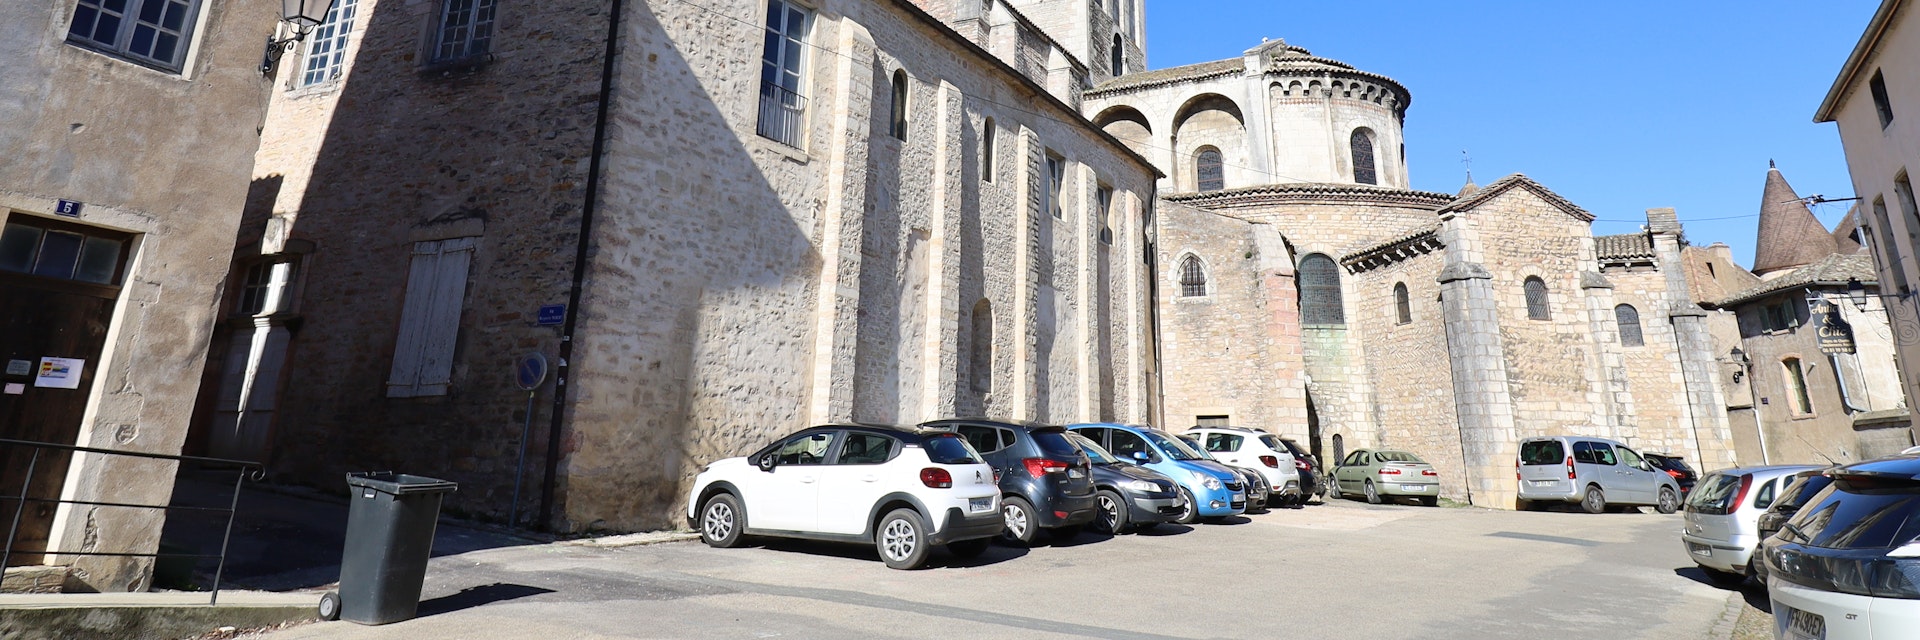 Saint Philibert Abbey in Tournus, France.